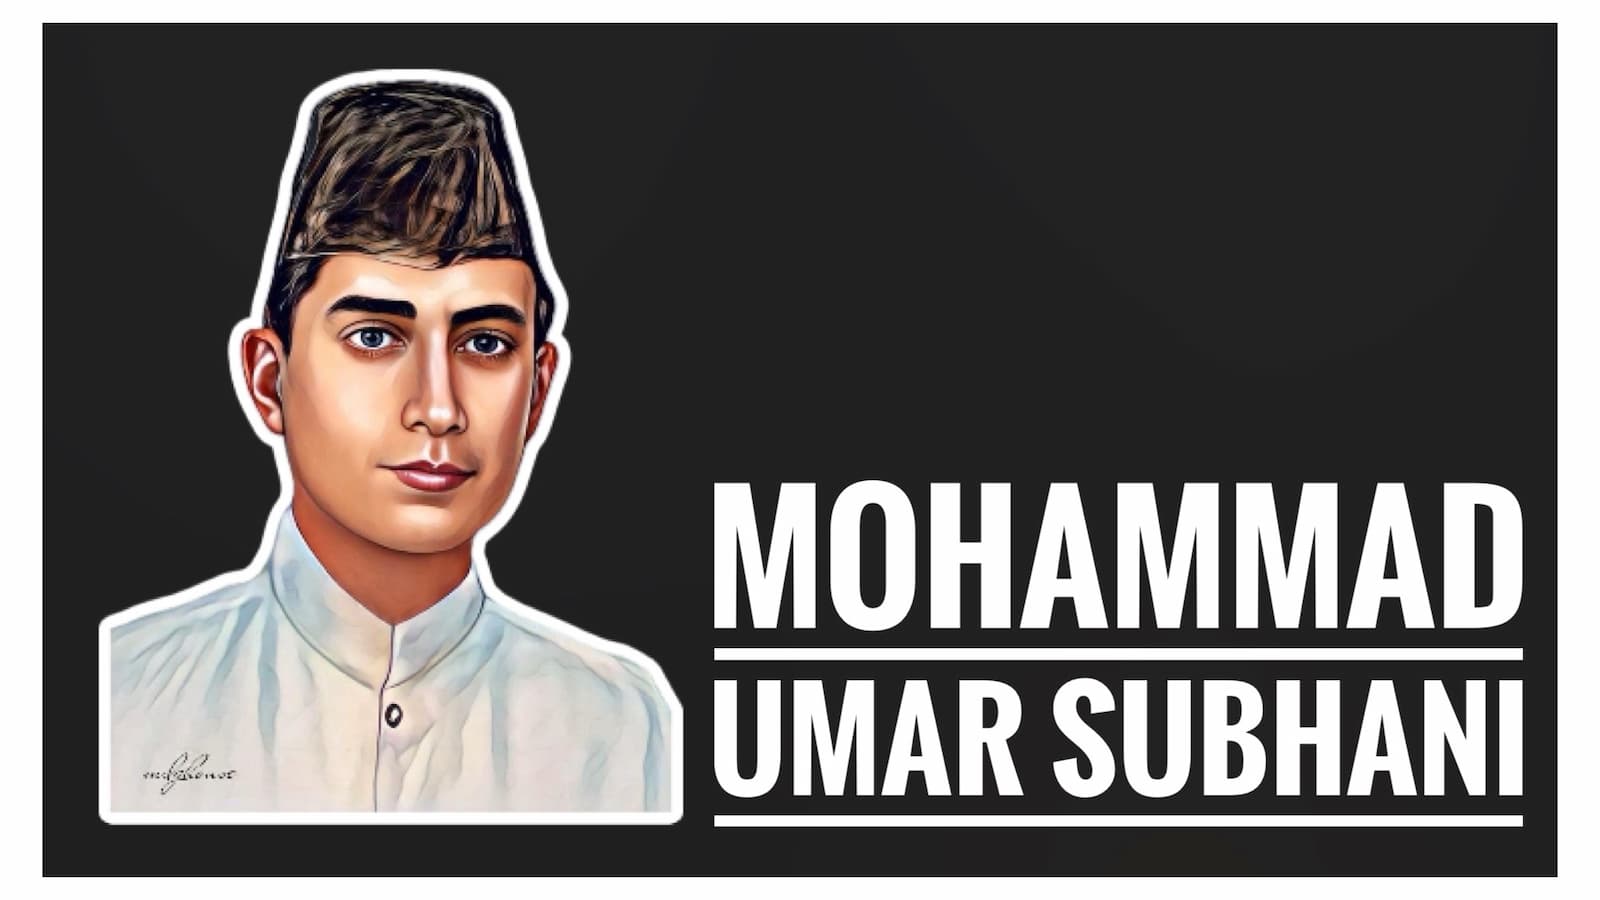 Mohammed Umar Subhani